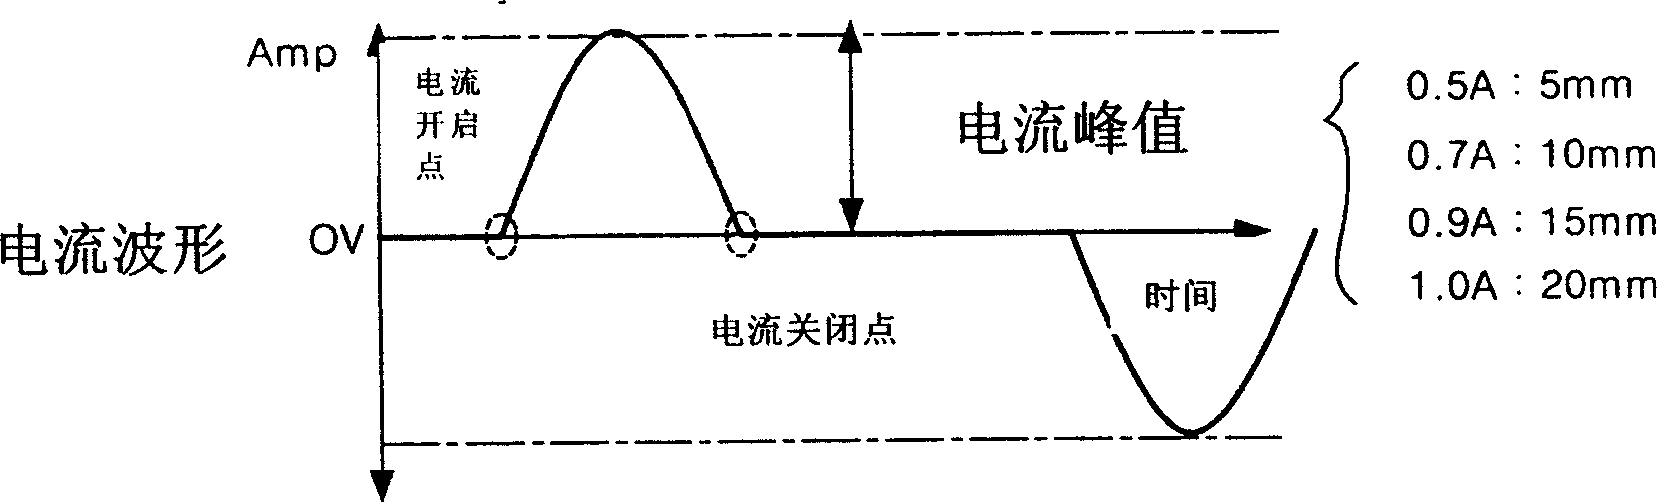 Operation control method for linear compressor